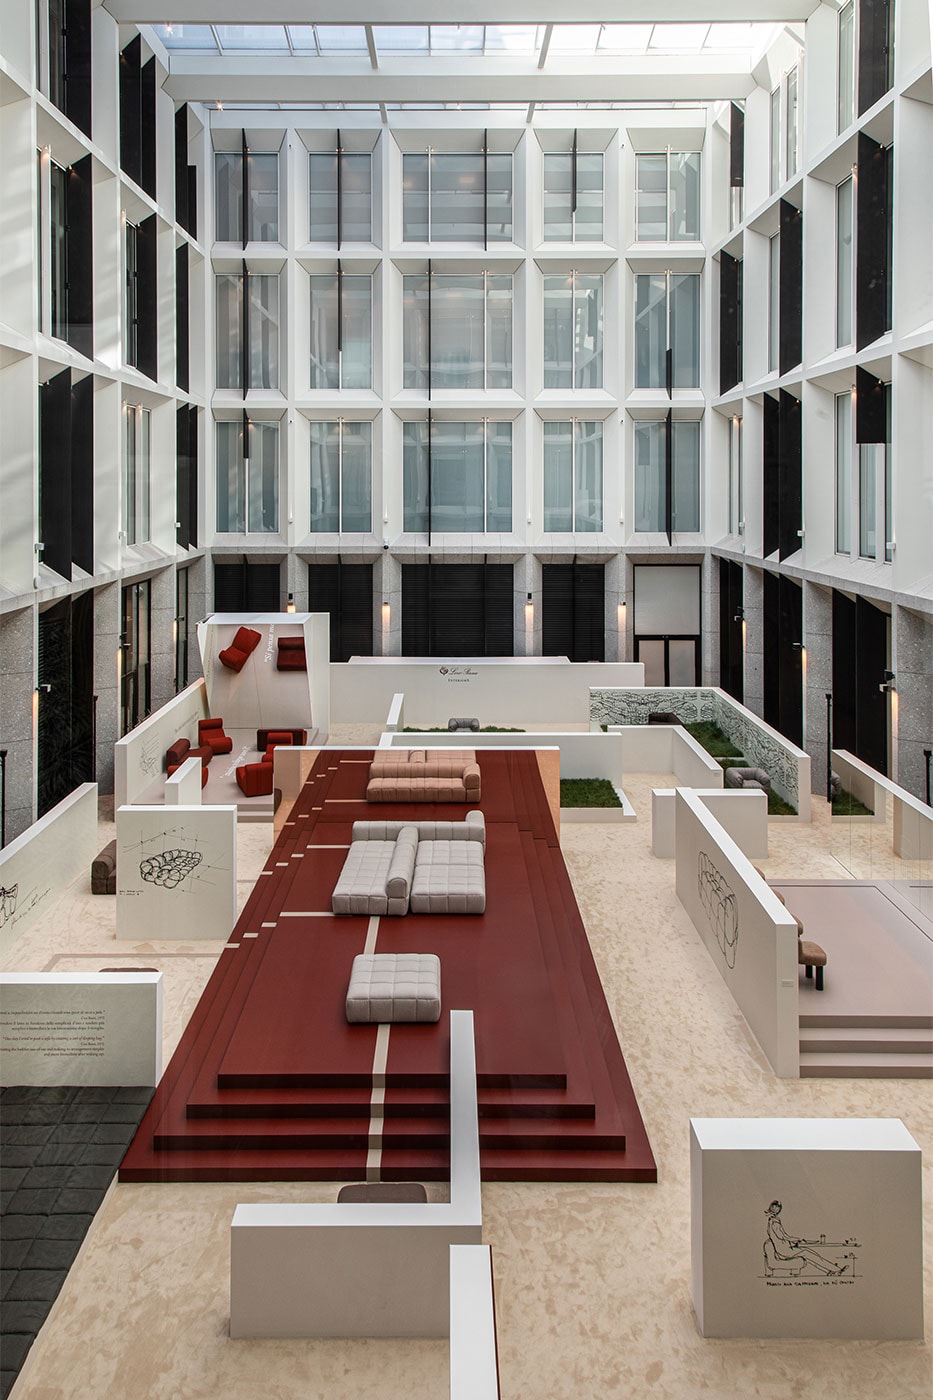 Design| Loro Piana Interiors Partake in Milan Design Week with “A Tribute to Cini Boeri”